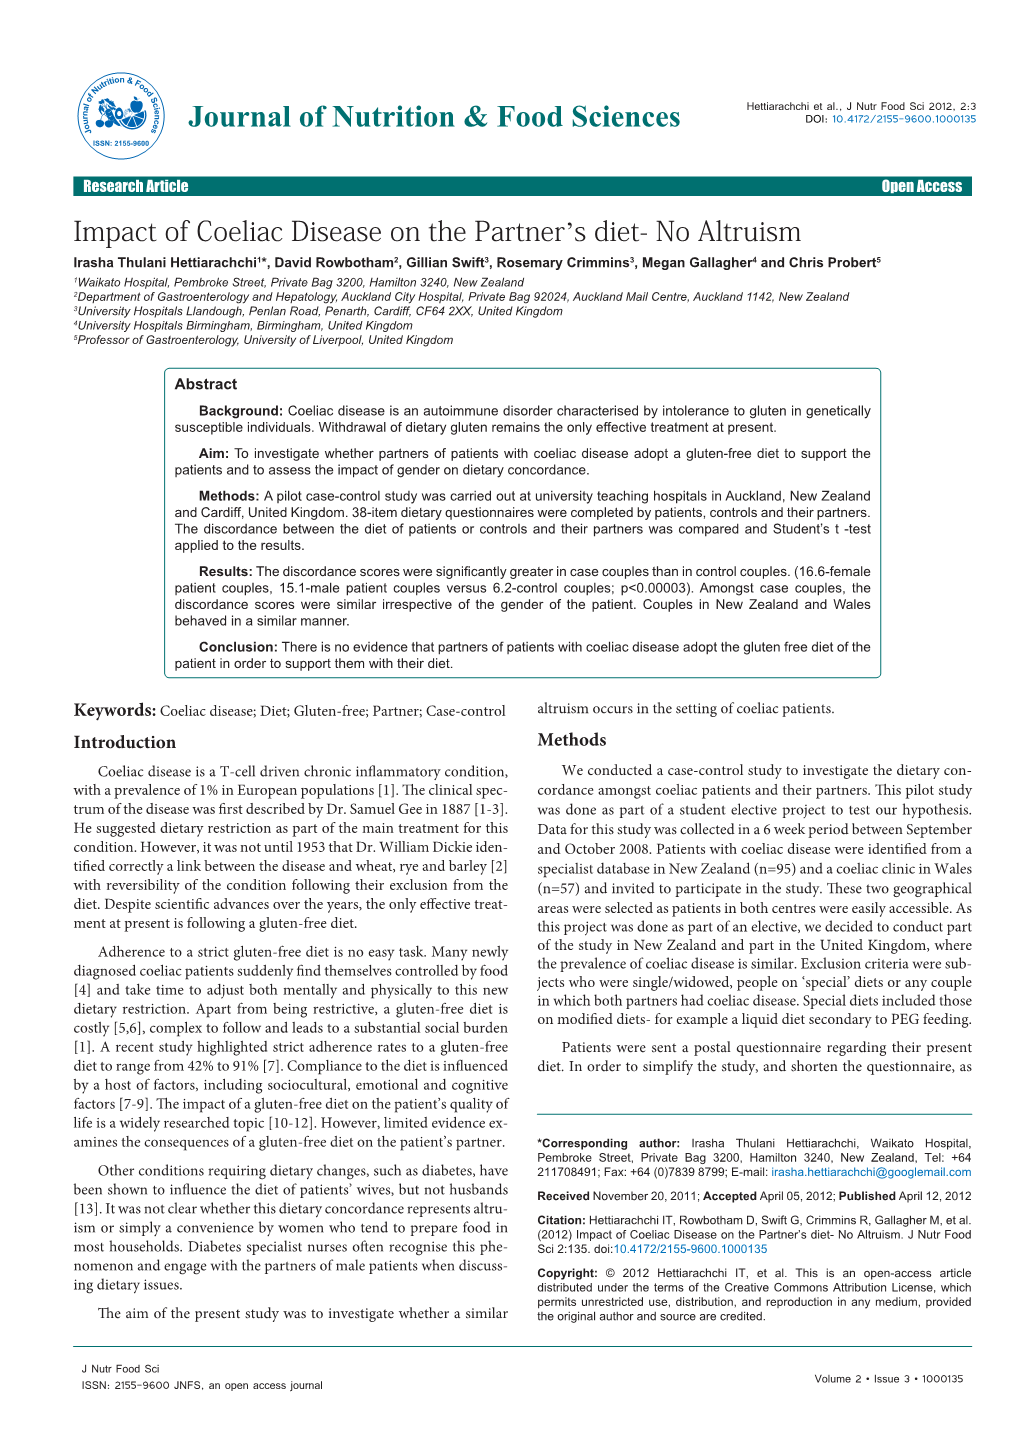 Impact of Coeliac Disease on the Partner's Diet- No Altruism